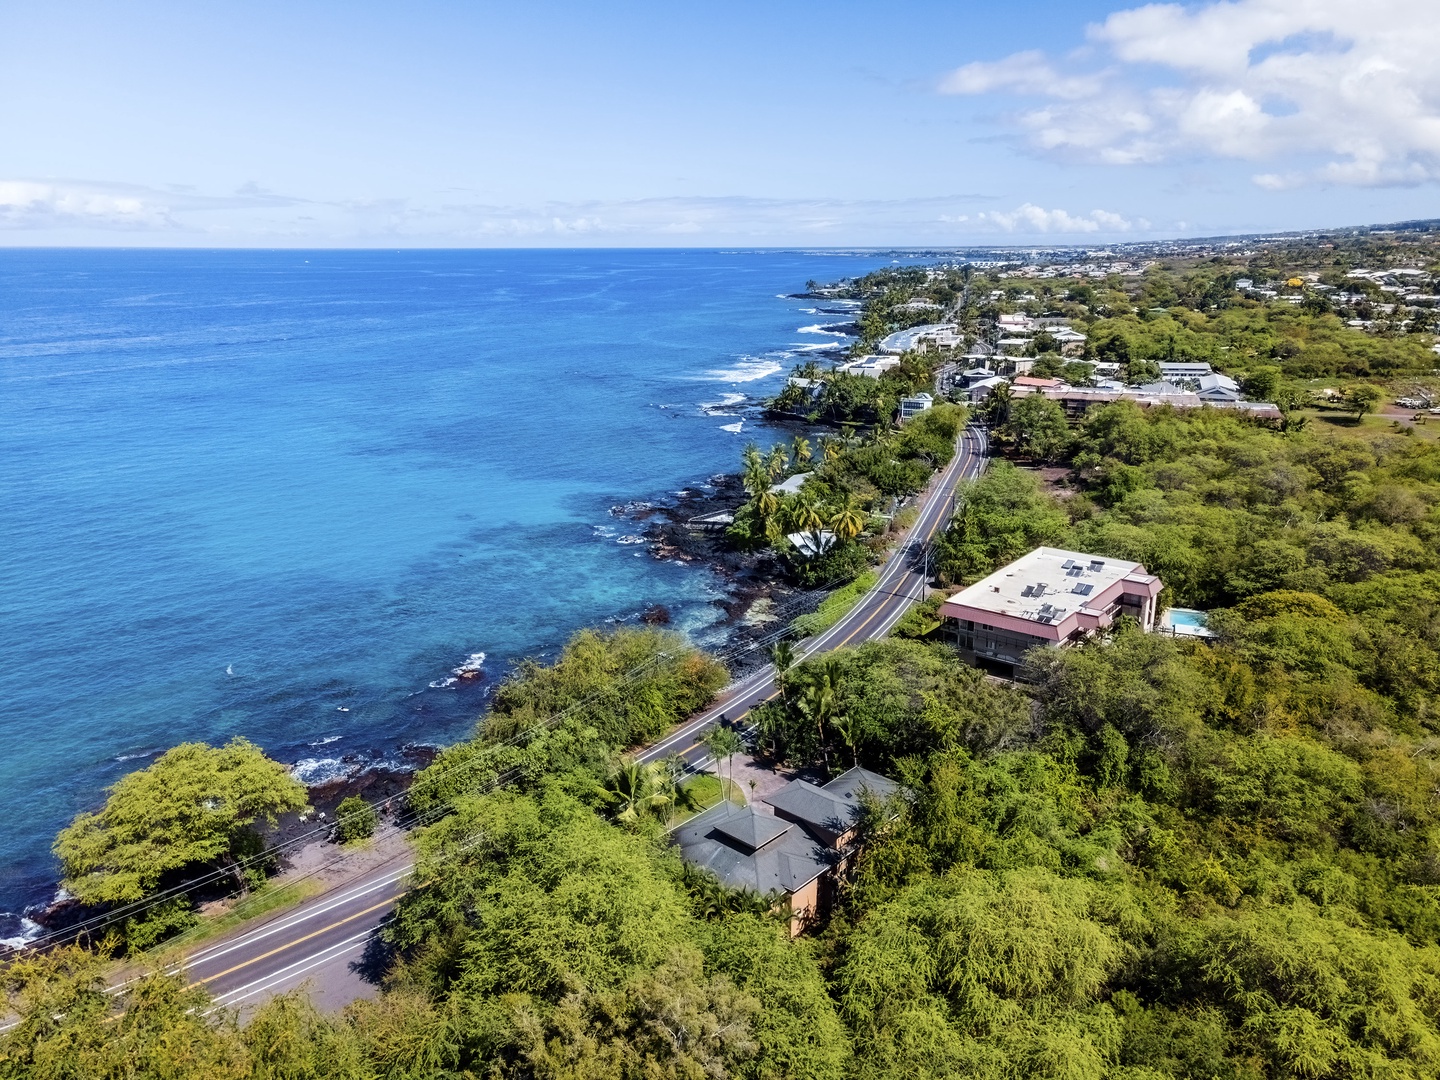 Kailua Kona Vacation Rentals, Lymans Bay Hale - Views of the coastline